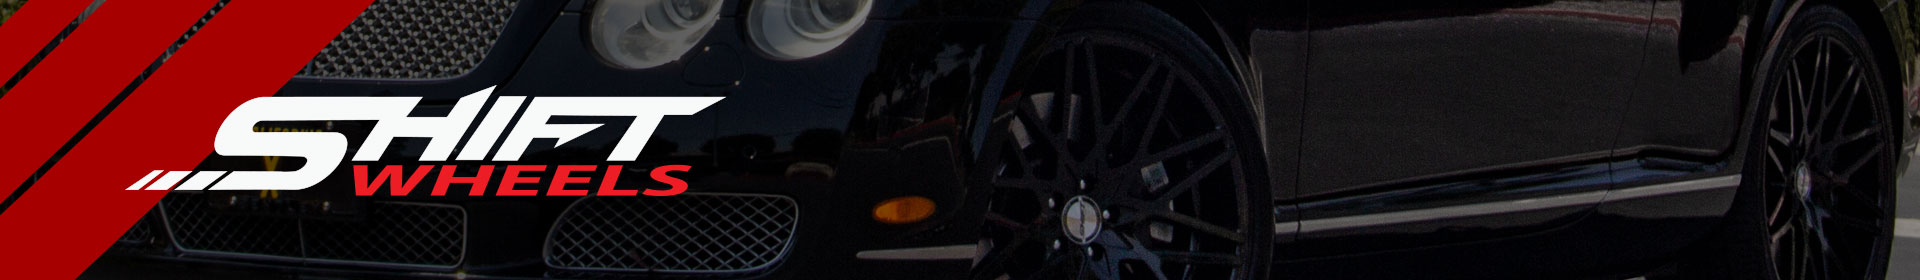 The Piston Wheel by Shift in Chrome – Strada Wheels